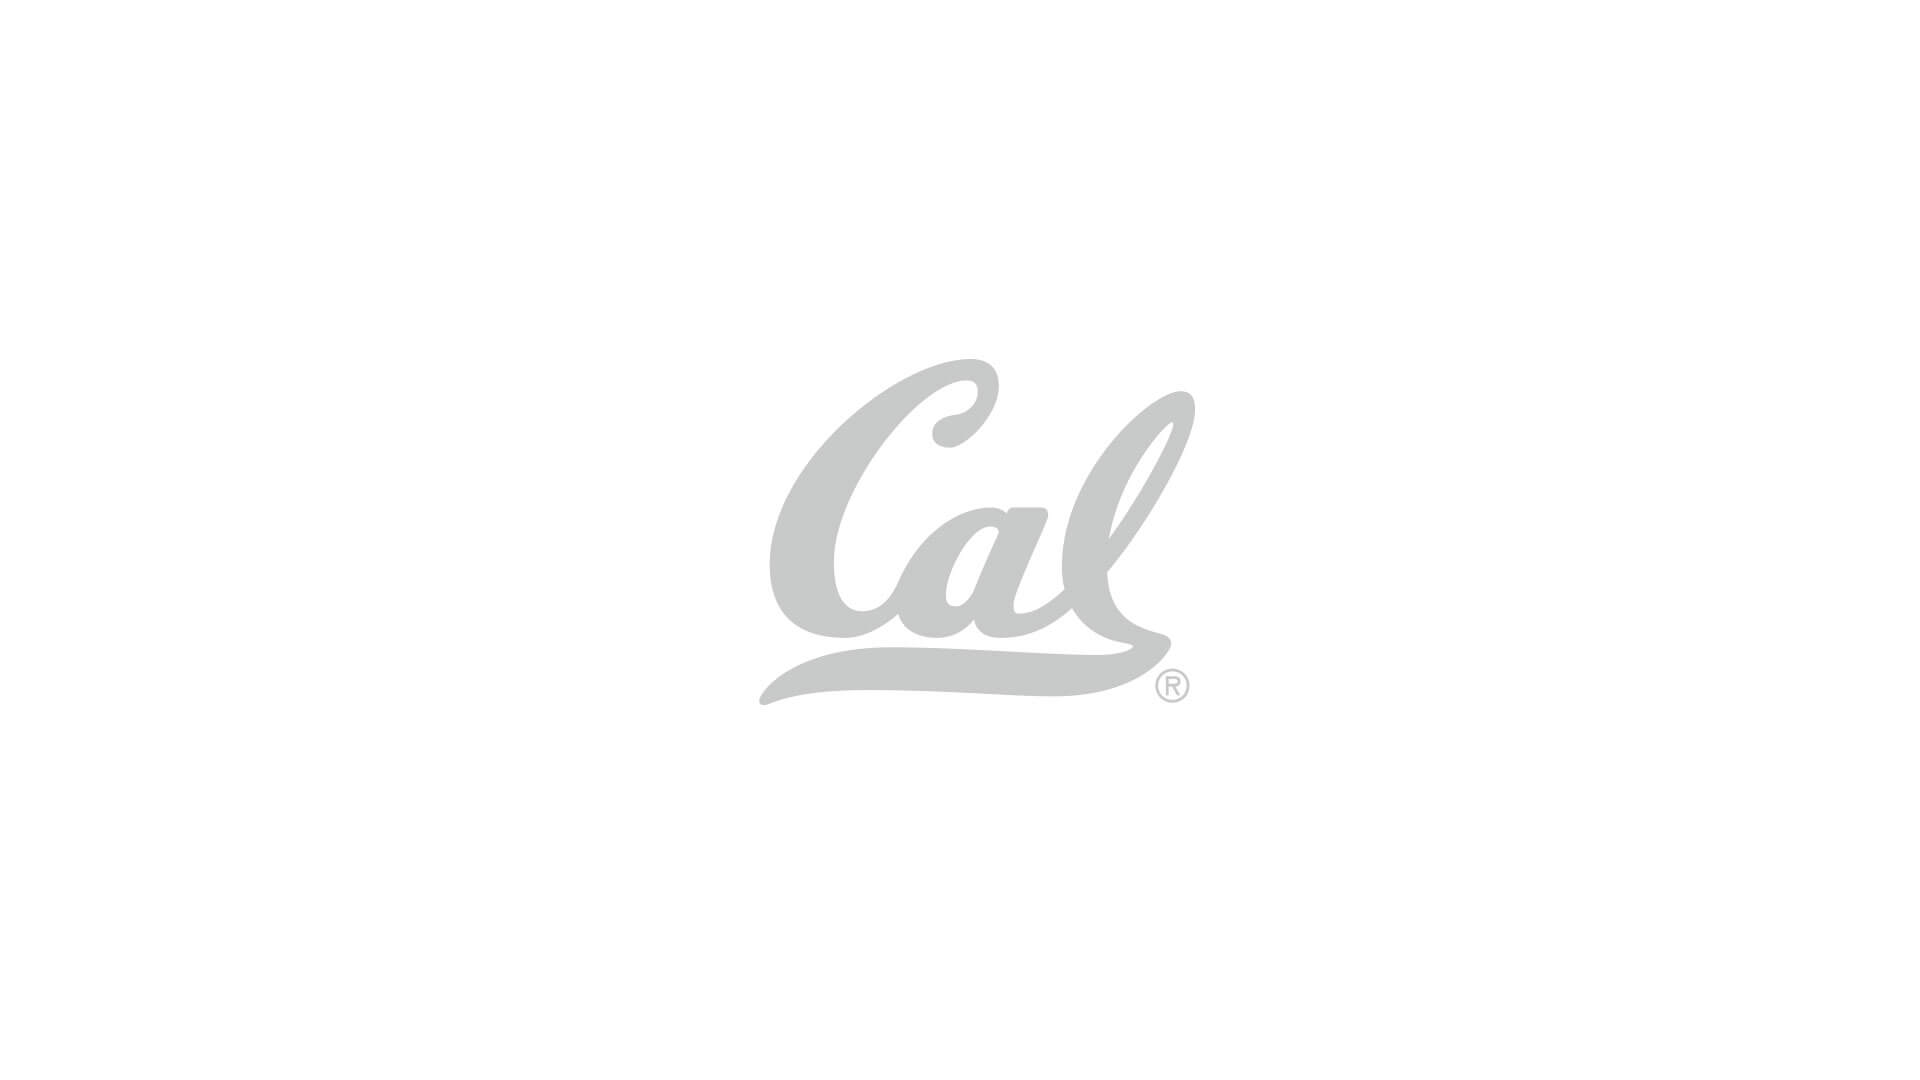 Cal Logo - University of California Golden Bears Athletics Athletics